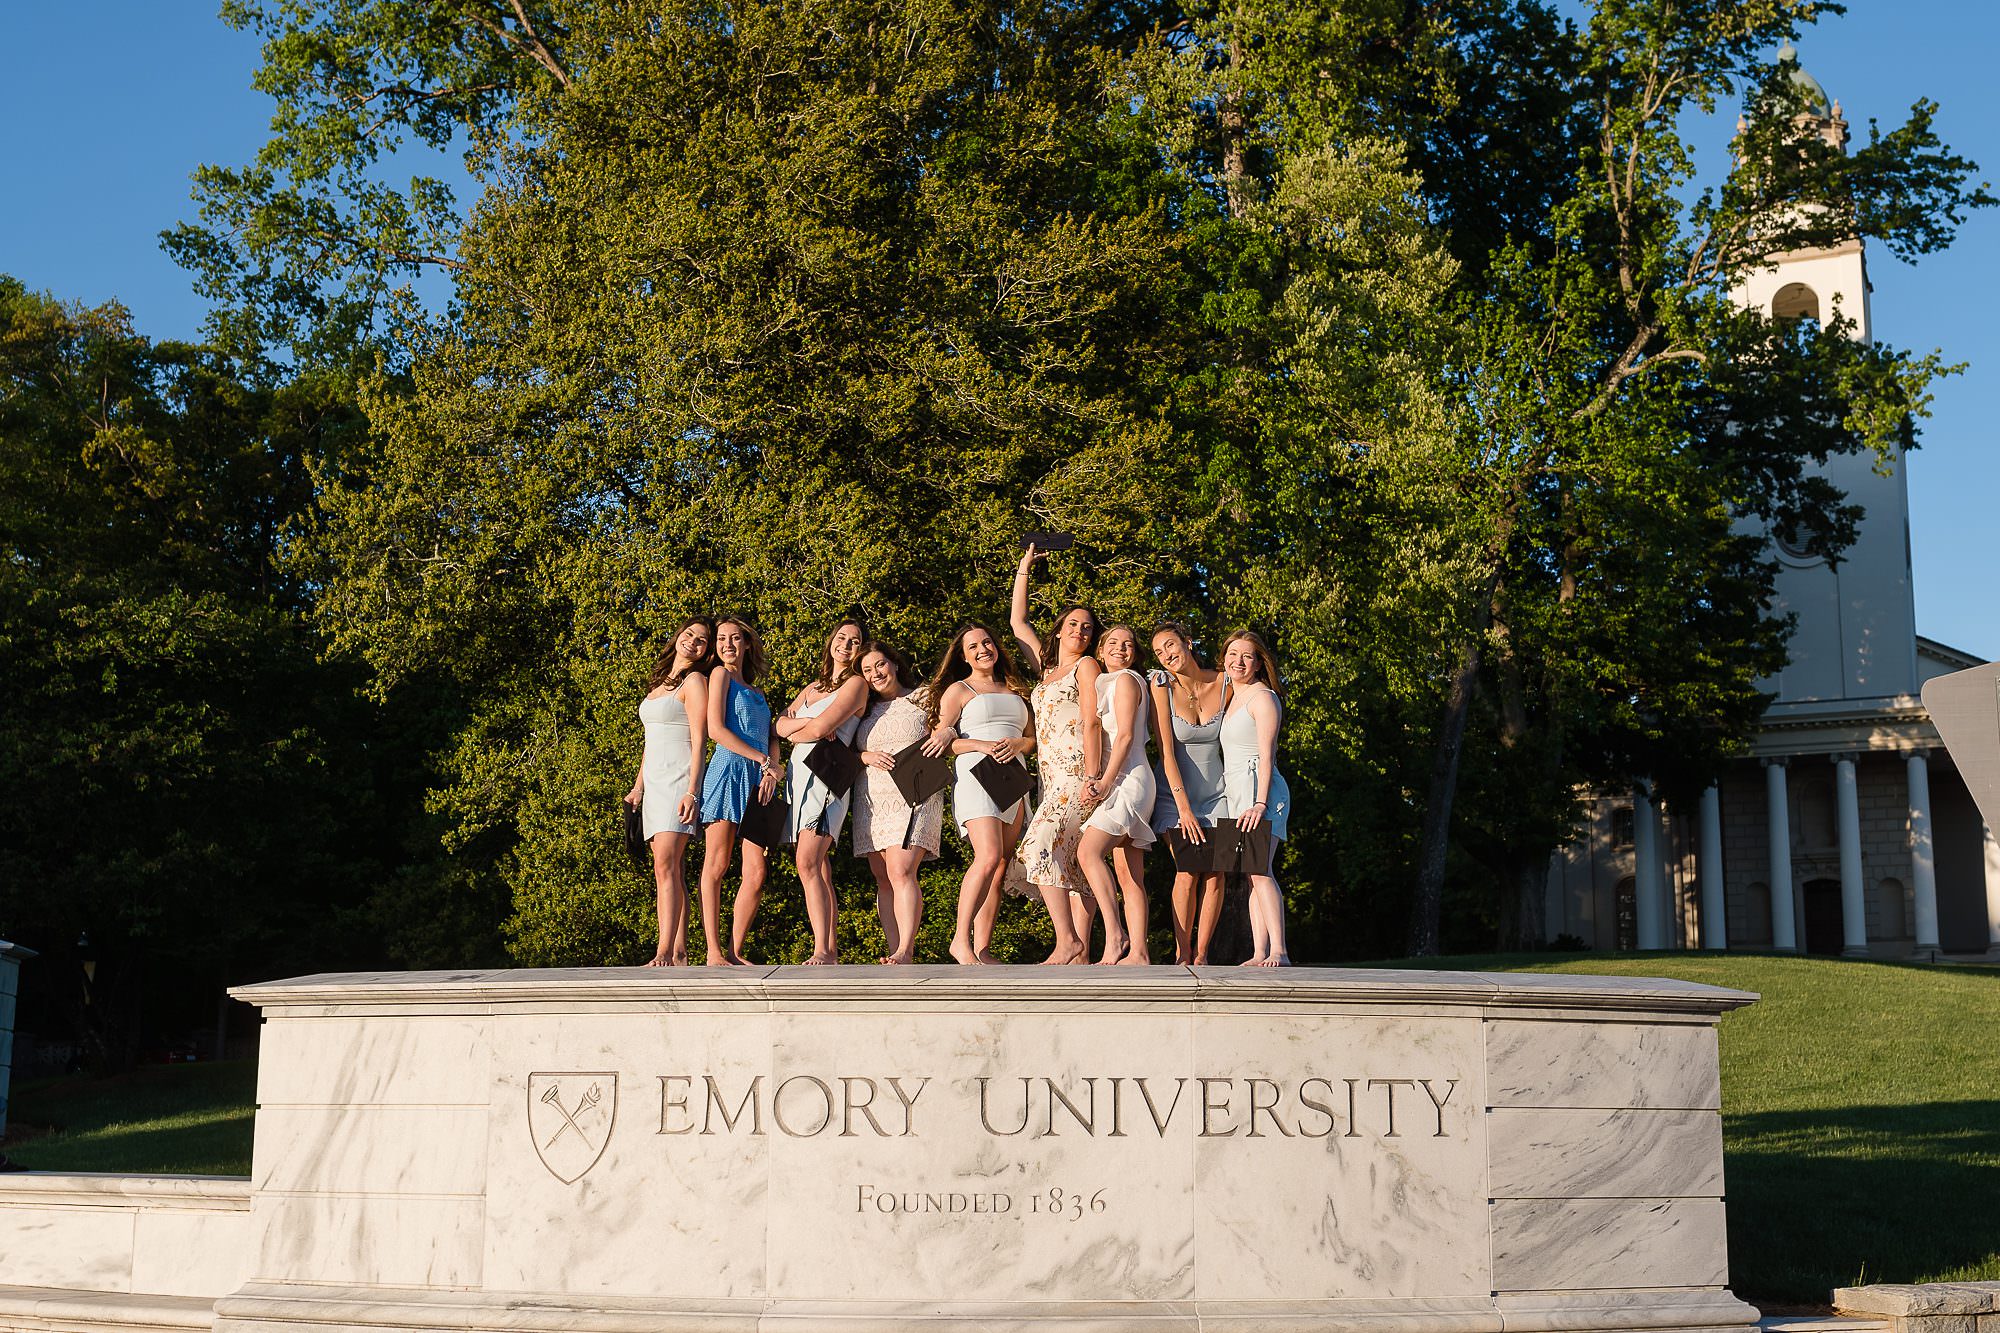 emory university friends graduation senior